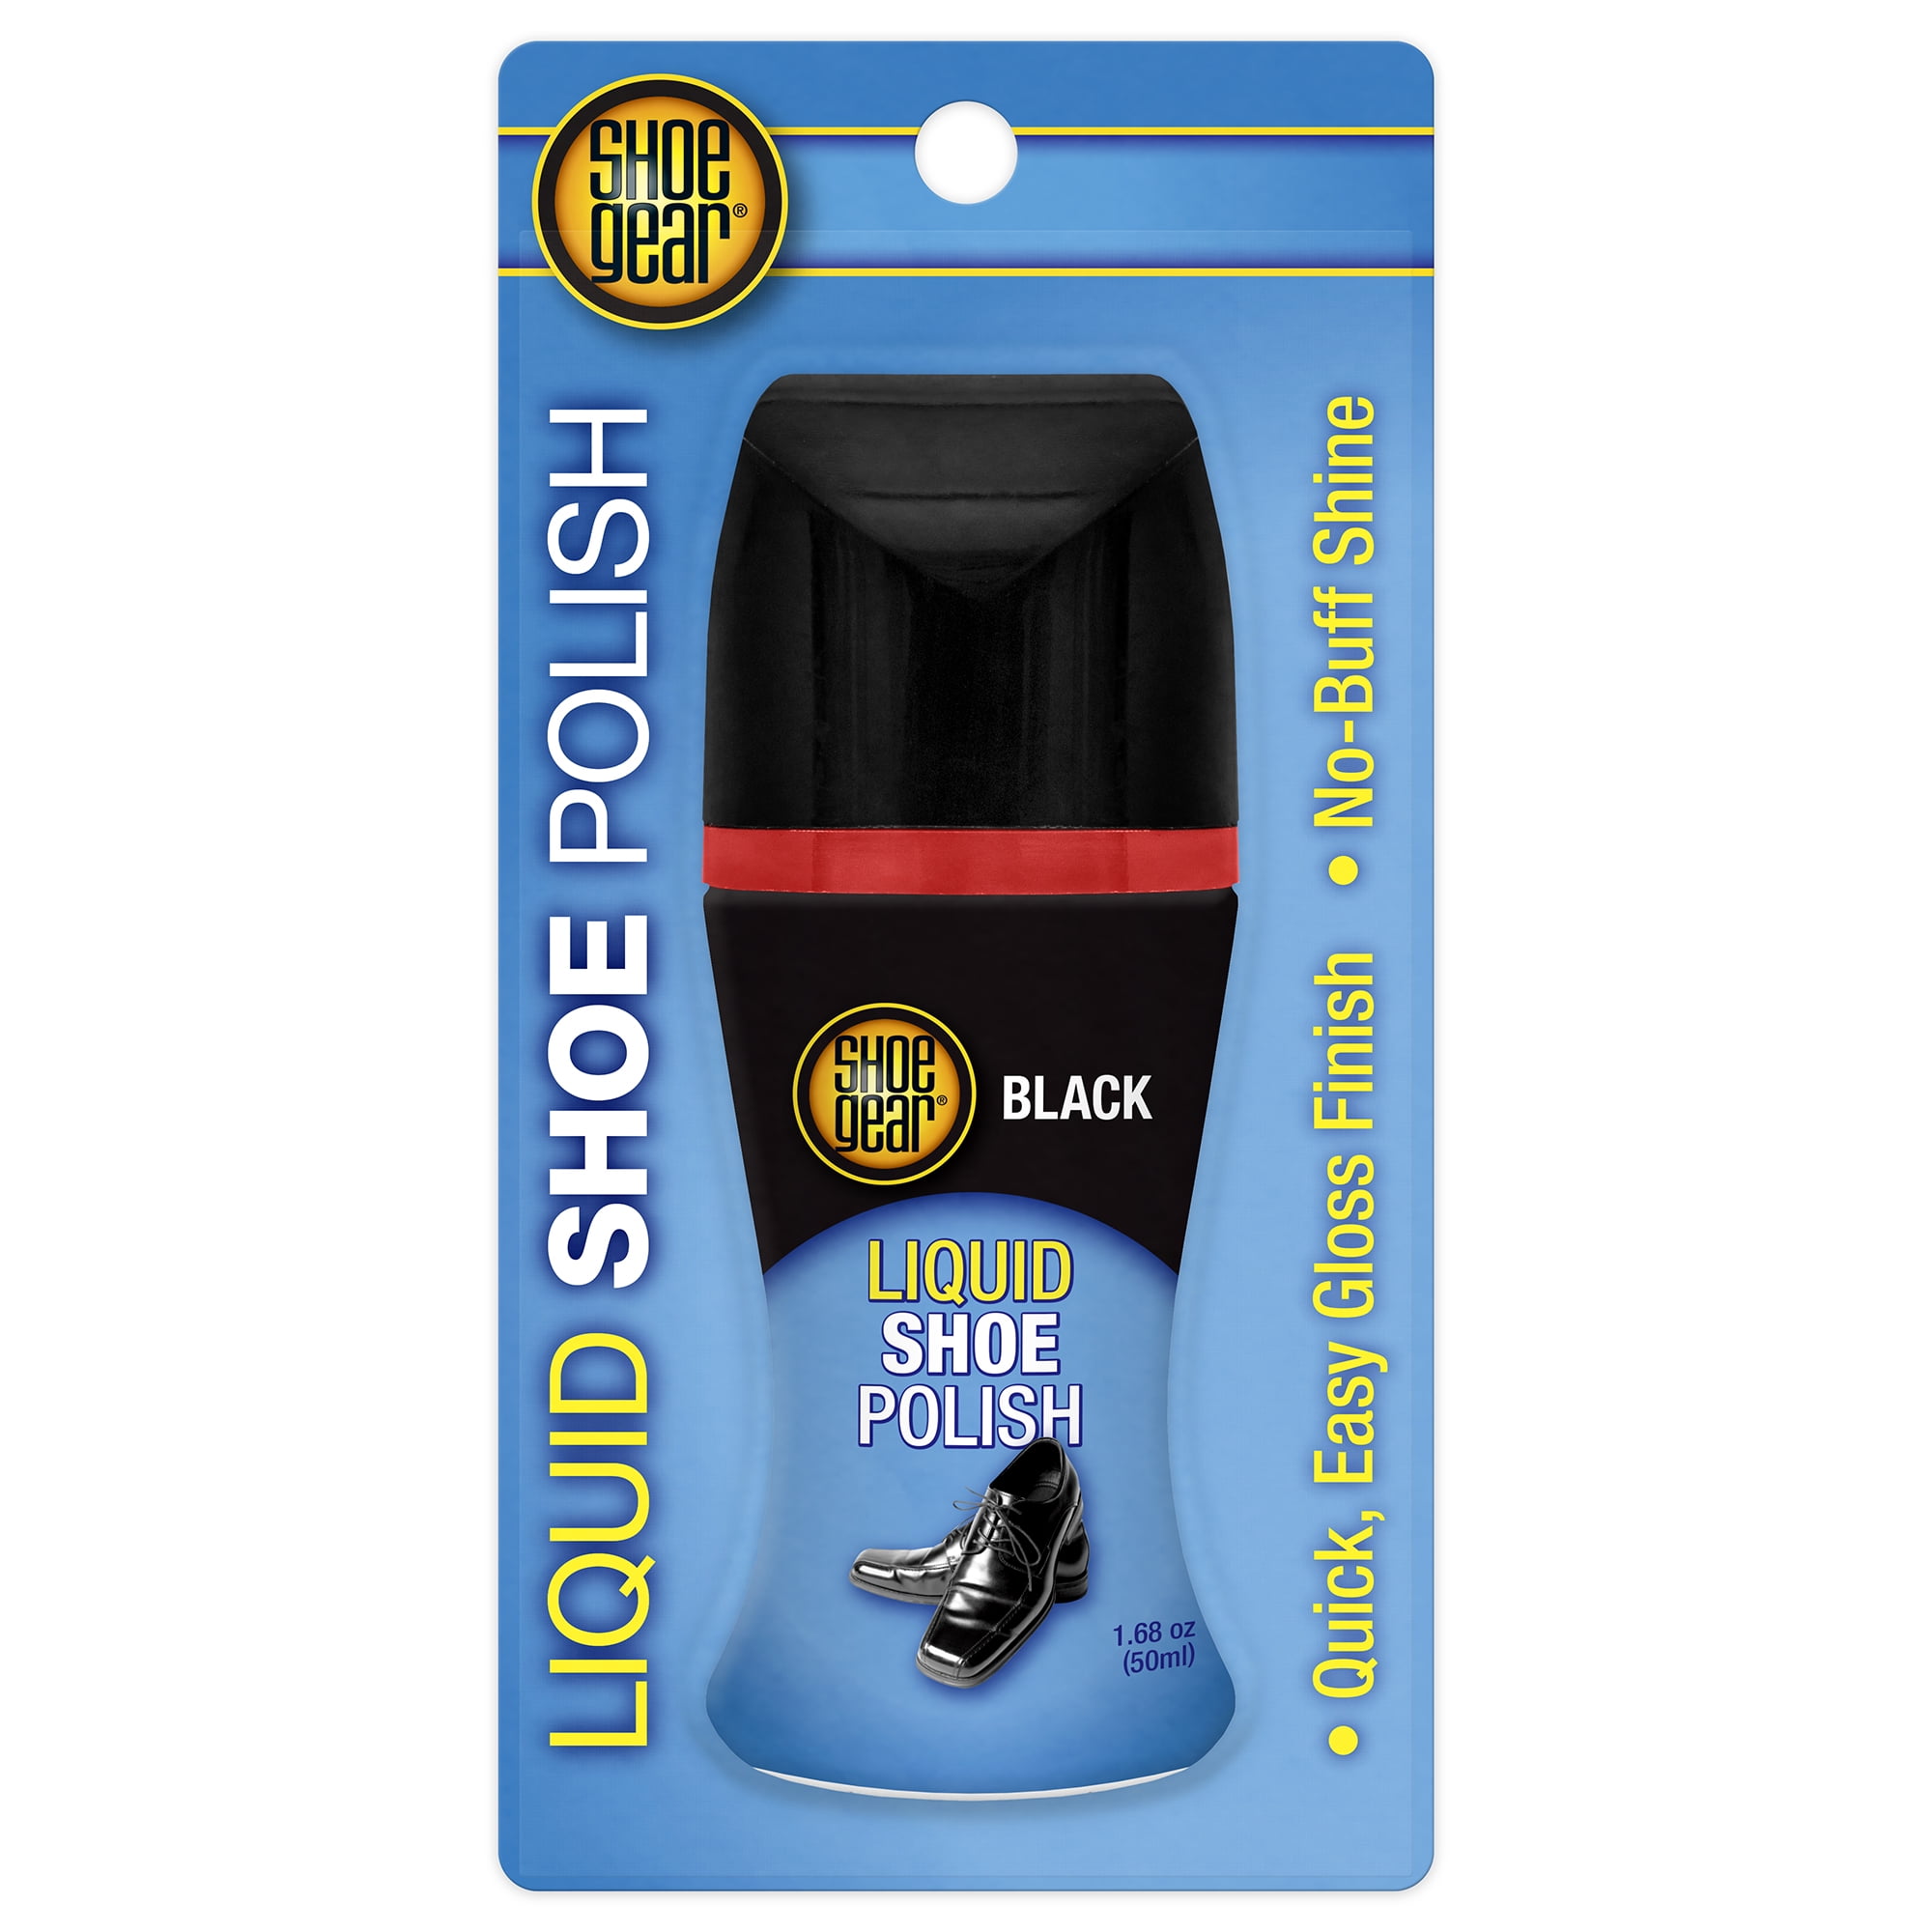 Shoe Gear Black Liquid Shoe Polish 1.68 